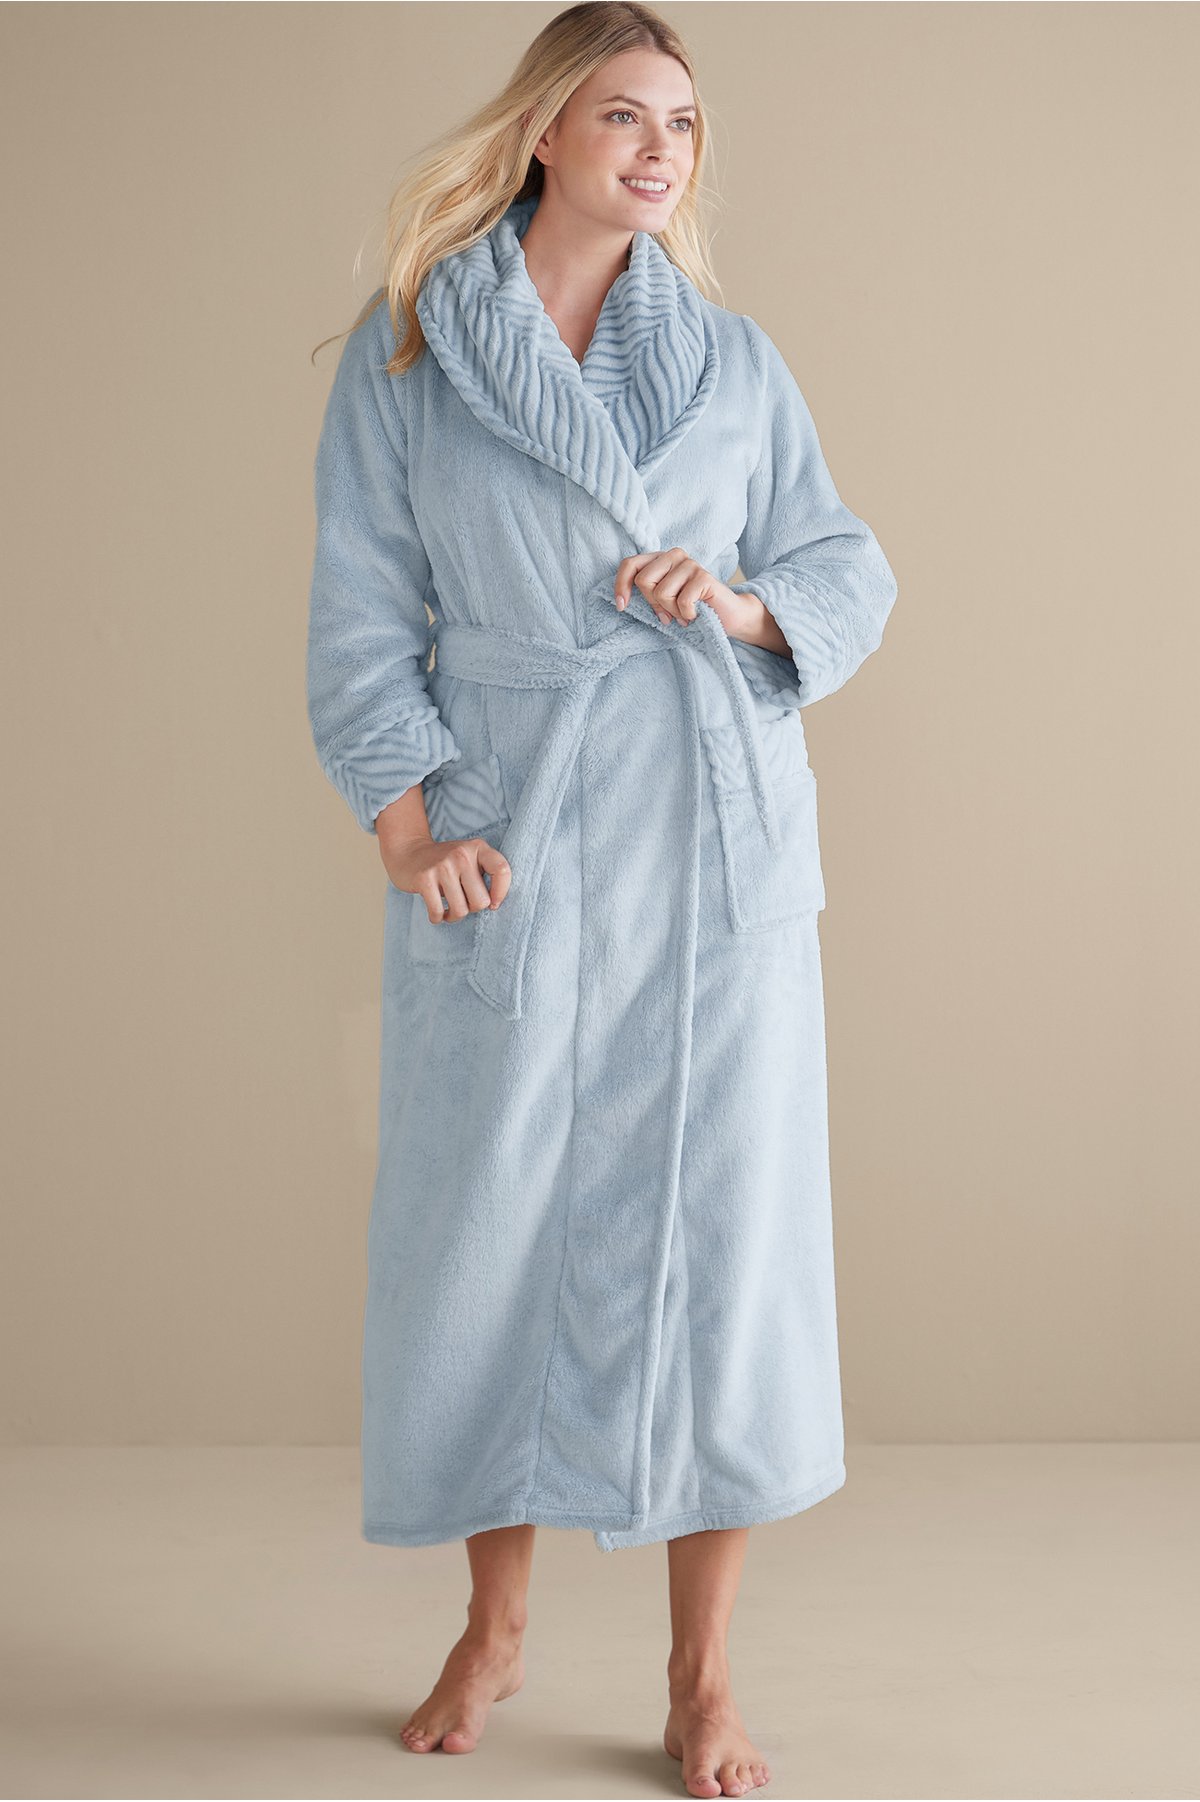 Women's Royal Plush Robe by Soft Surroundings, in Blue Fog size XL (18)